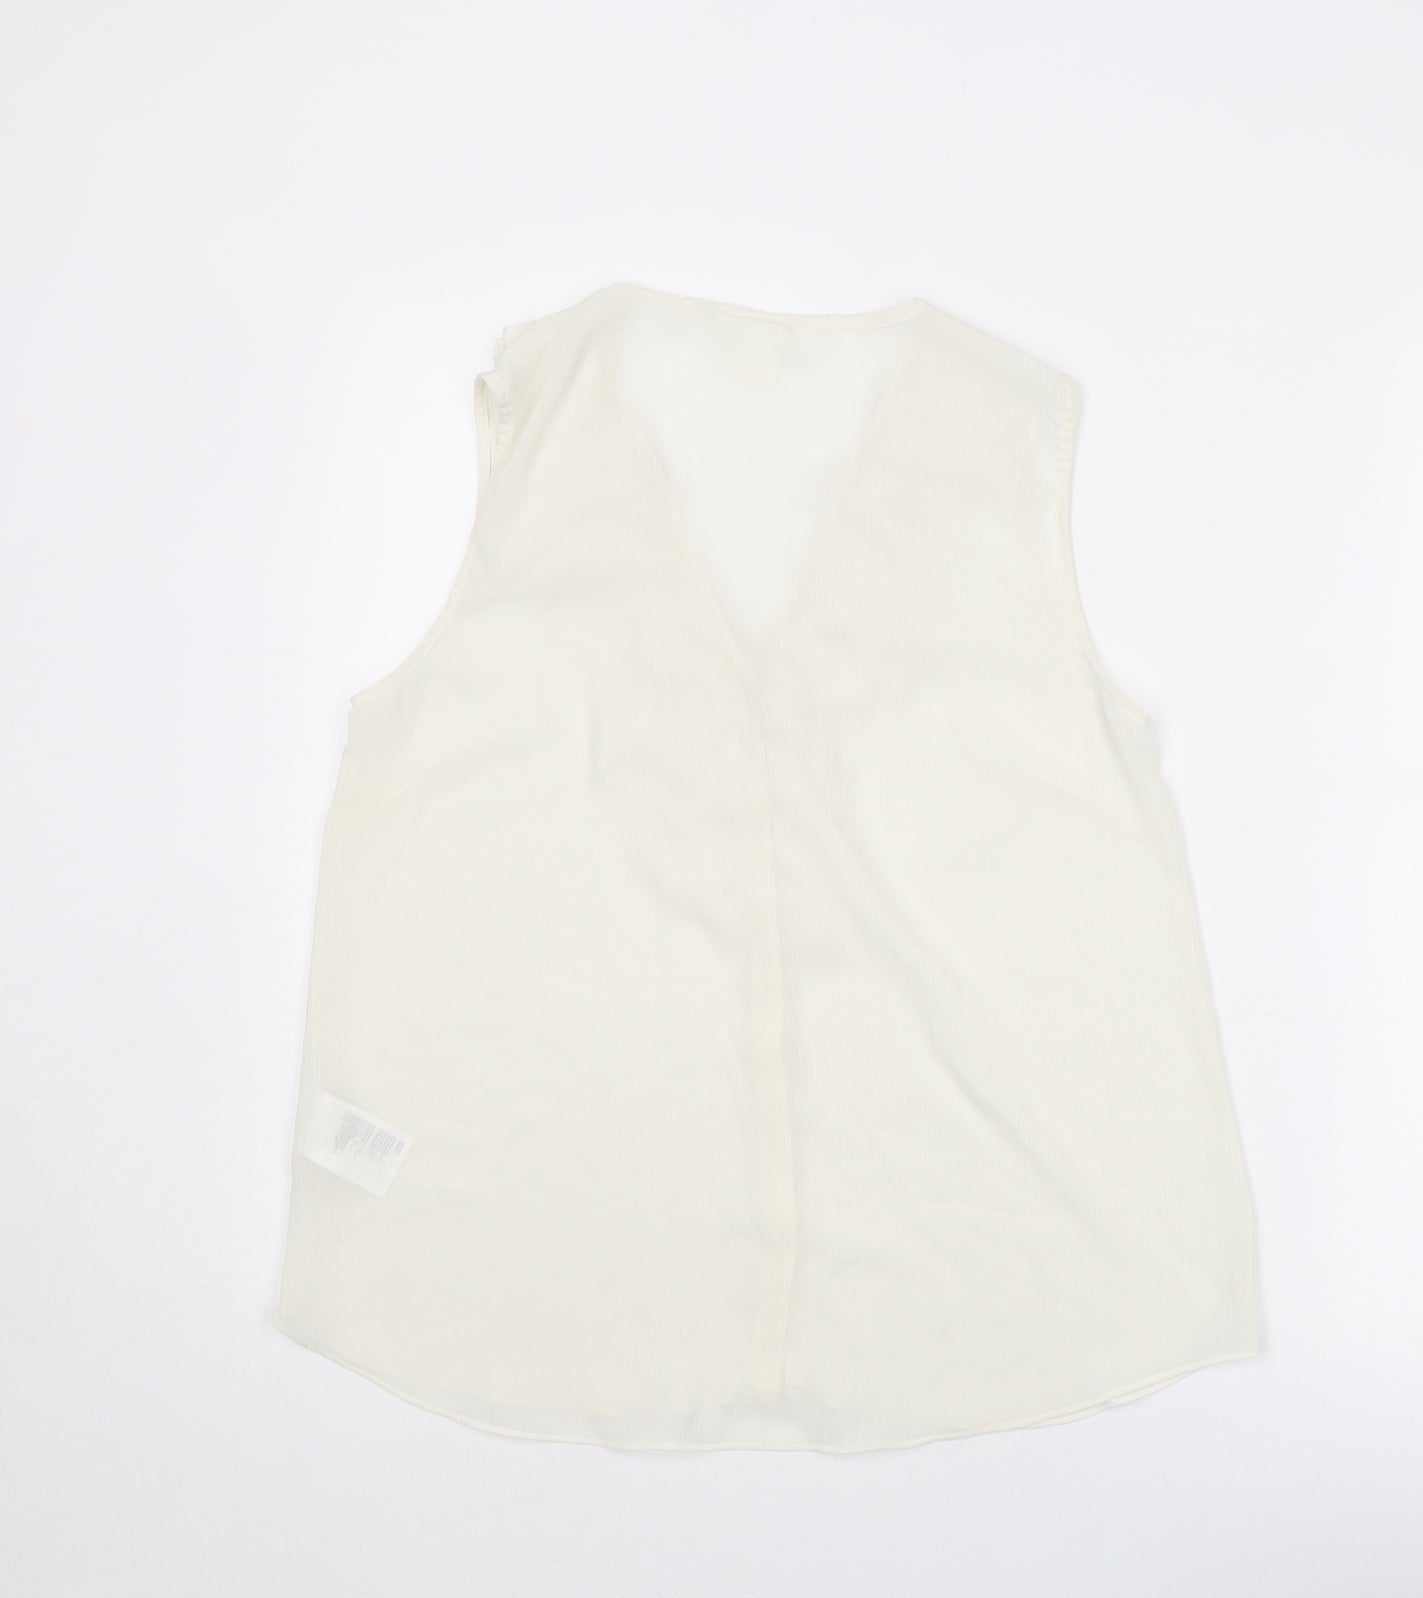 H&M Womens Ivory Polyester Basic Blouse Size 10 V-Neck